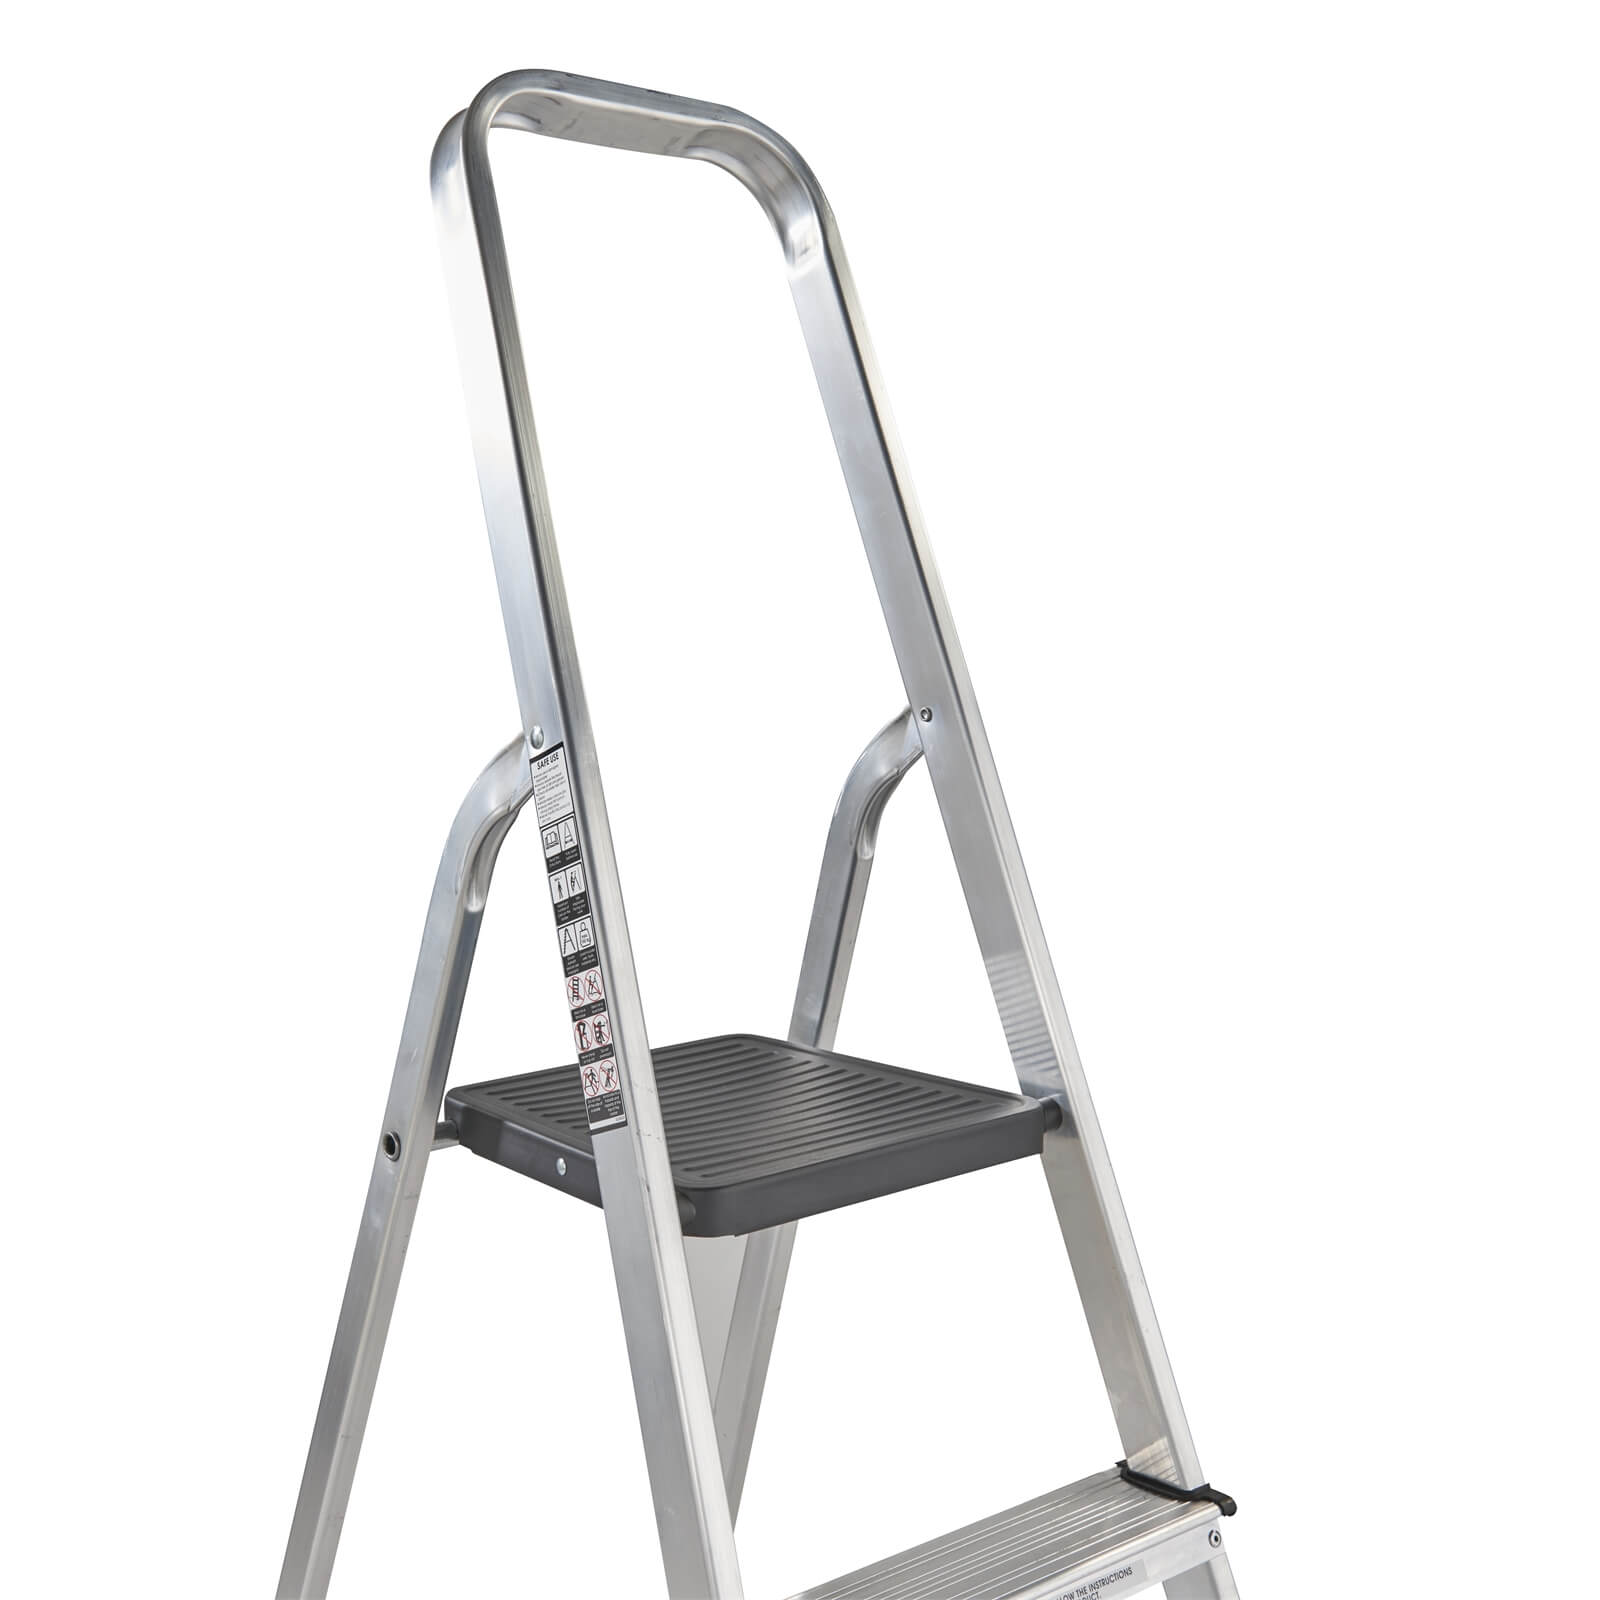 Werner High Handrail Step Ladder - 8 Tread